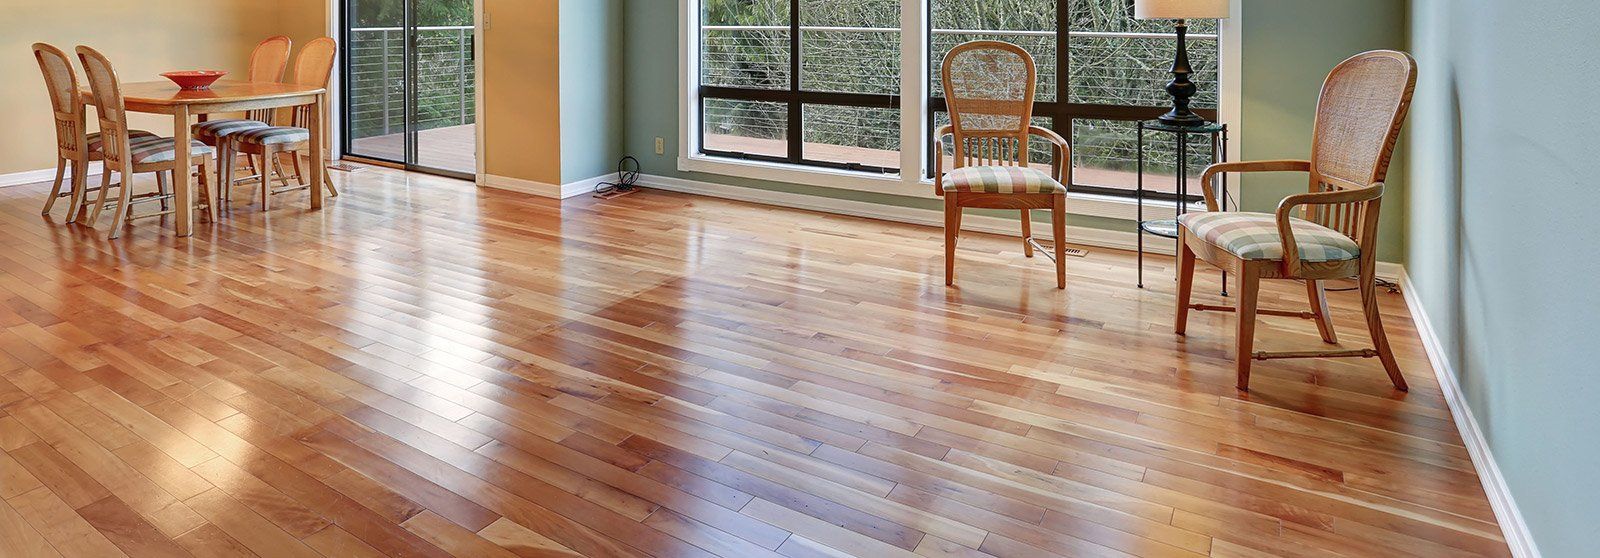 Home wood flooring